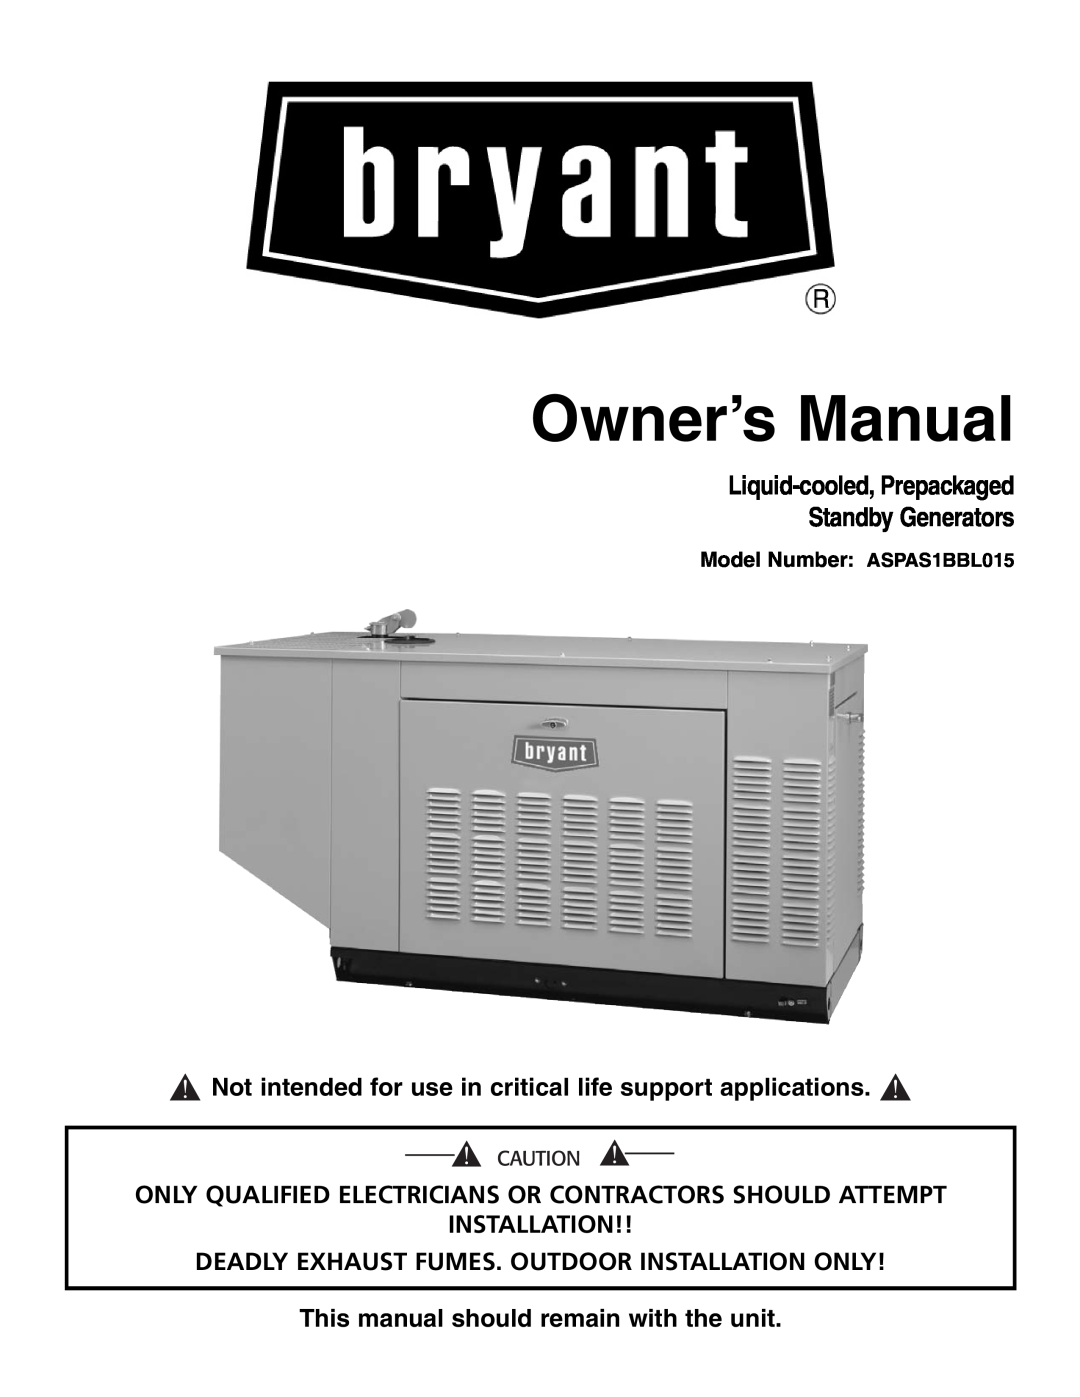 Bryant owner manual Model Number ASPAS1BBL015, Owner’s Manual, Liquid-cooled,Prepackaged Standby Generators 